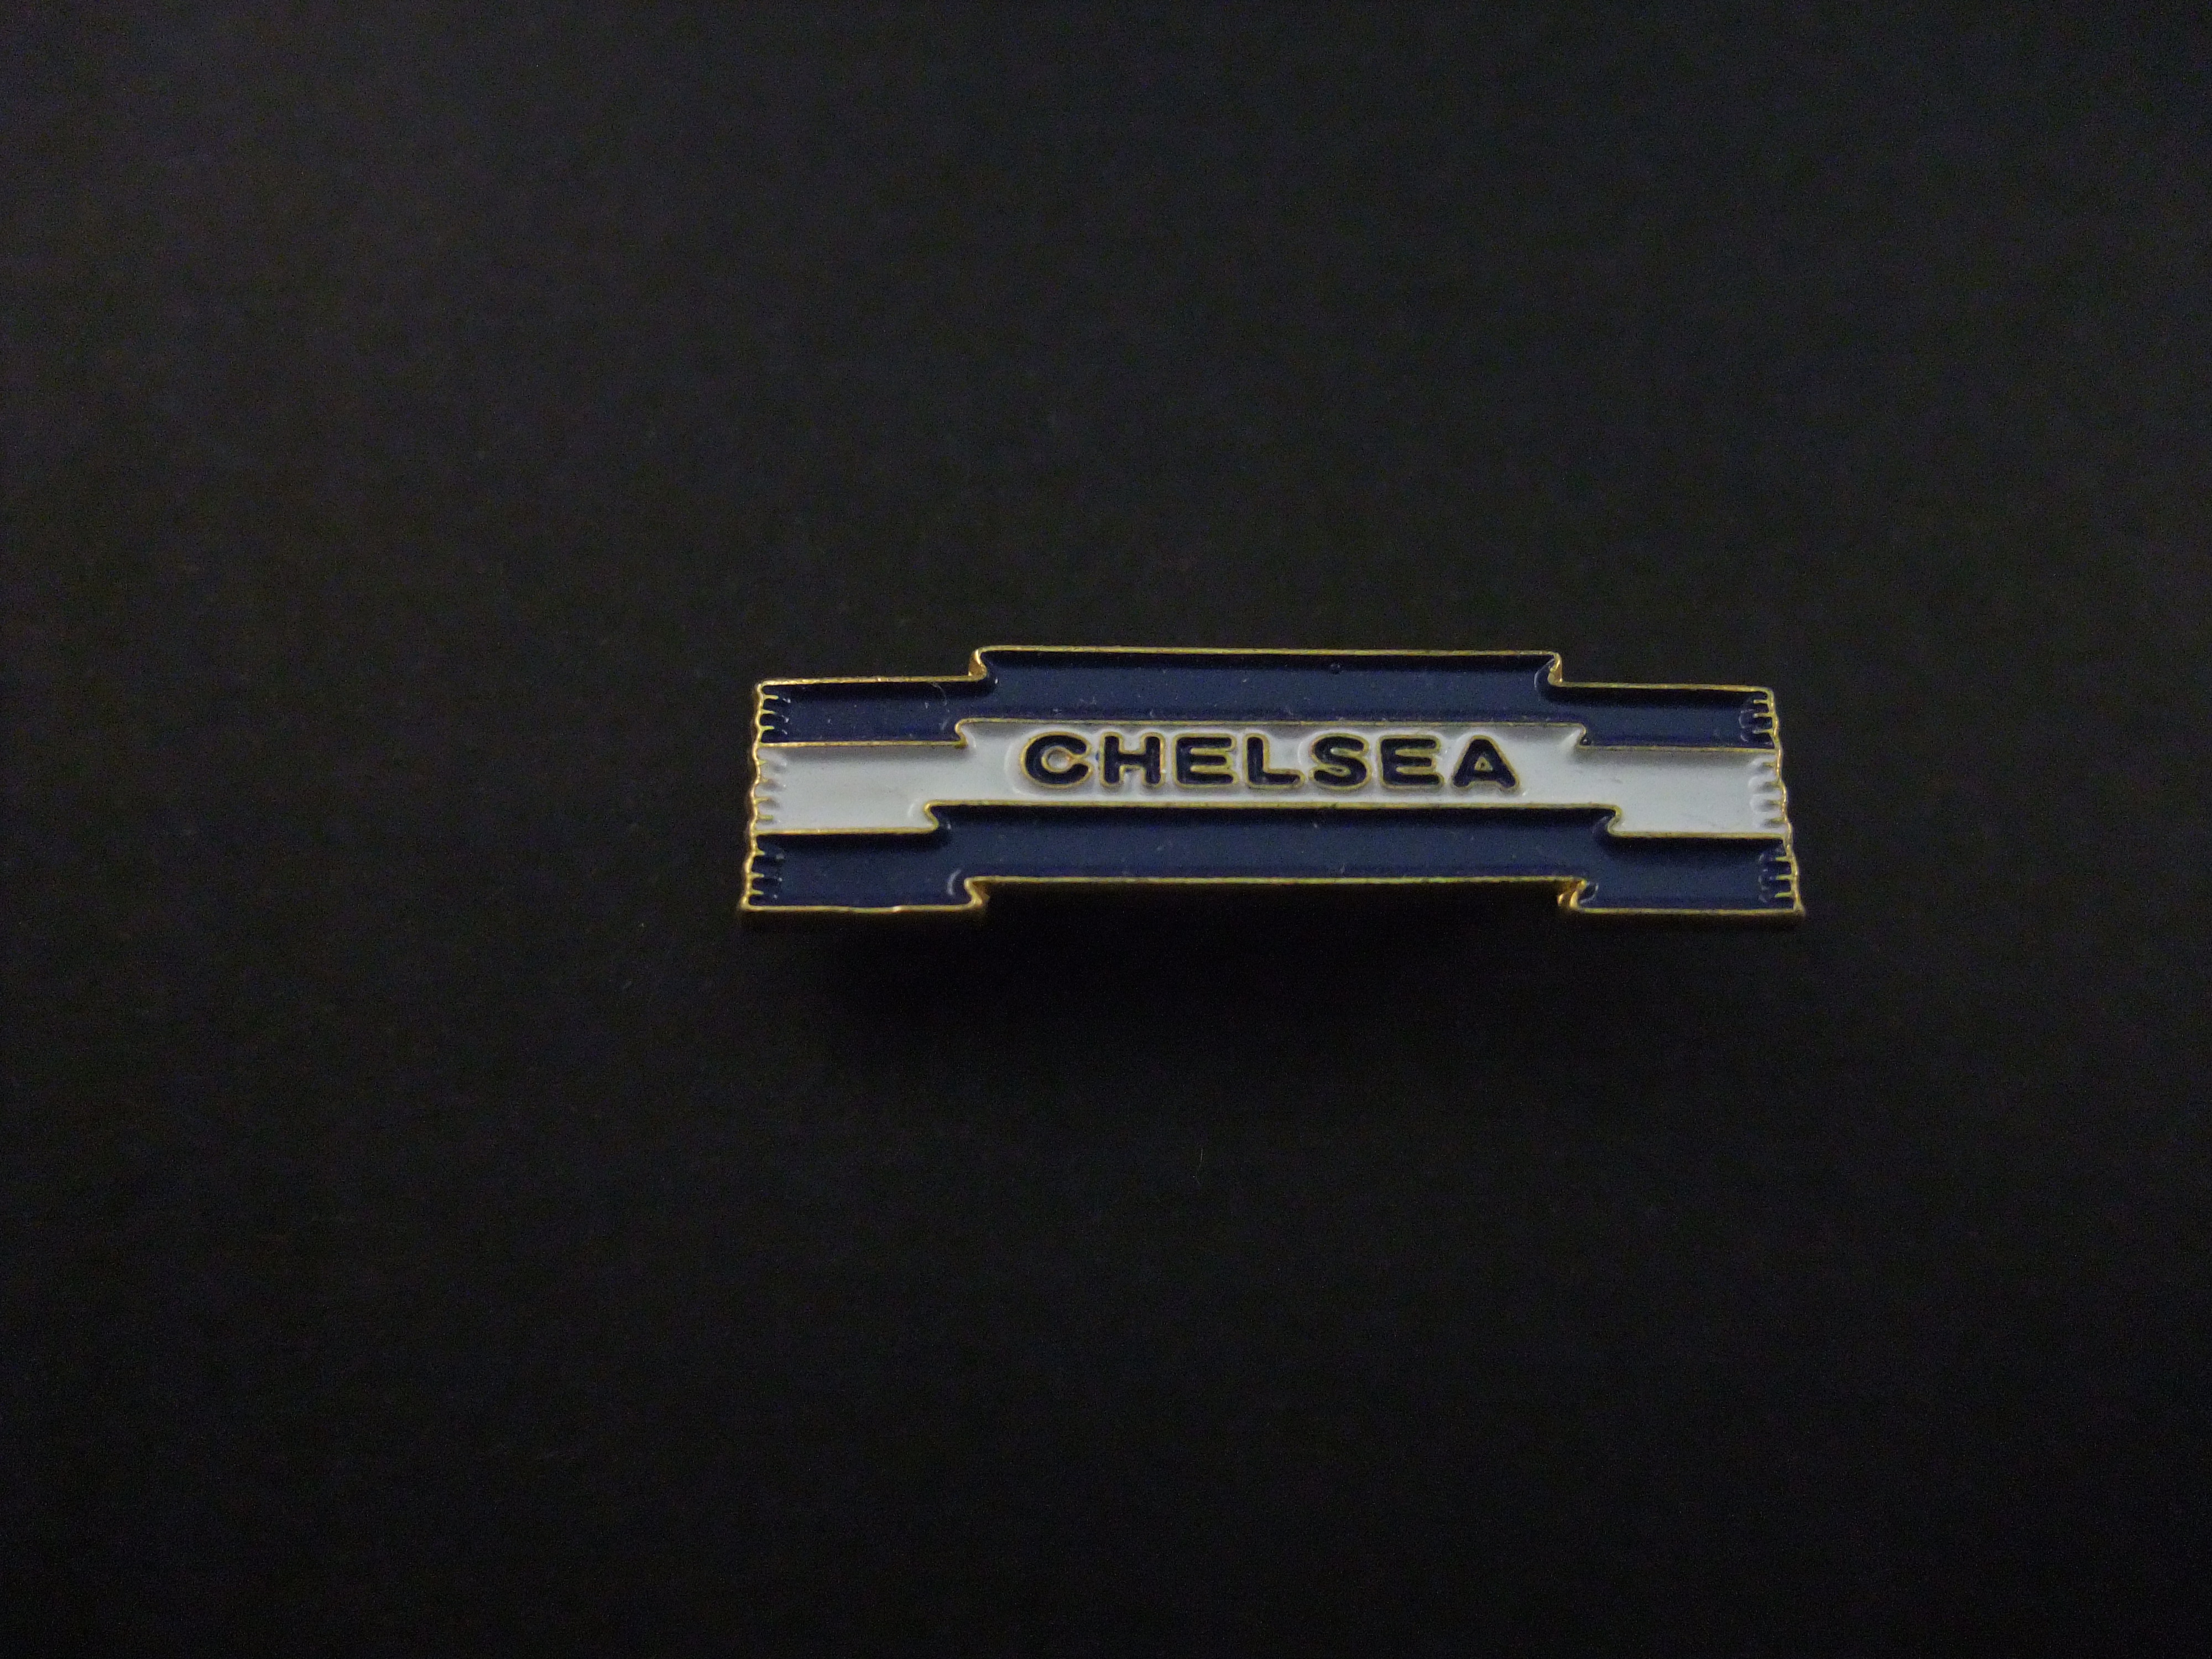 Chelsea Engelse voetbalclub spelend in de Premier league logo in de clubkleuren